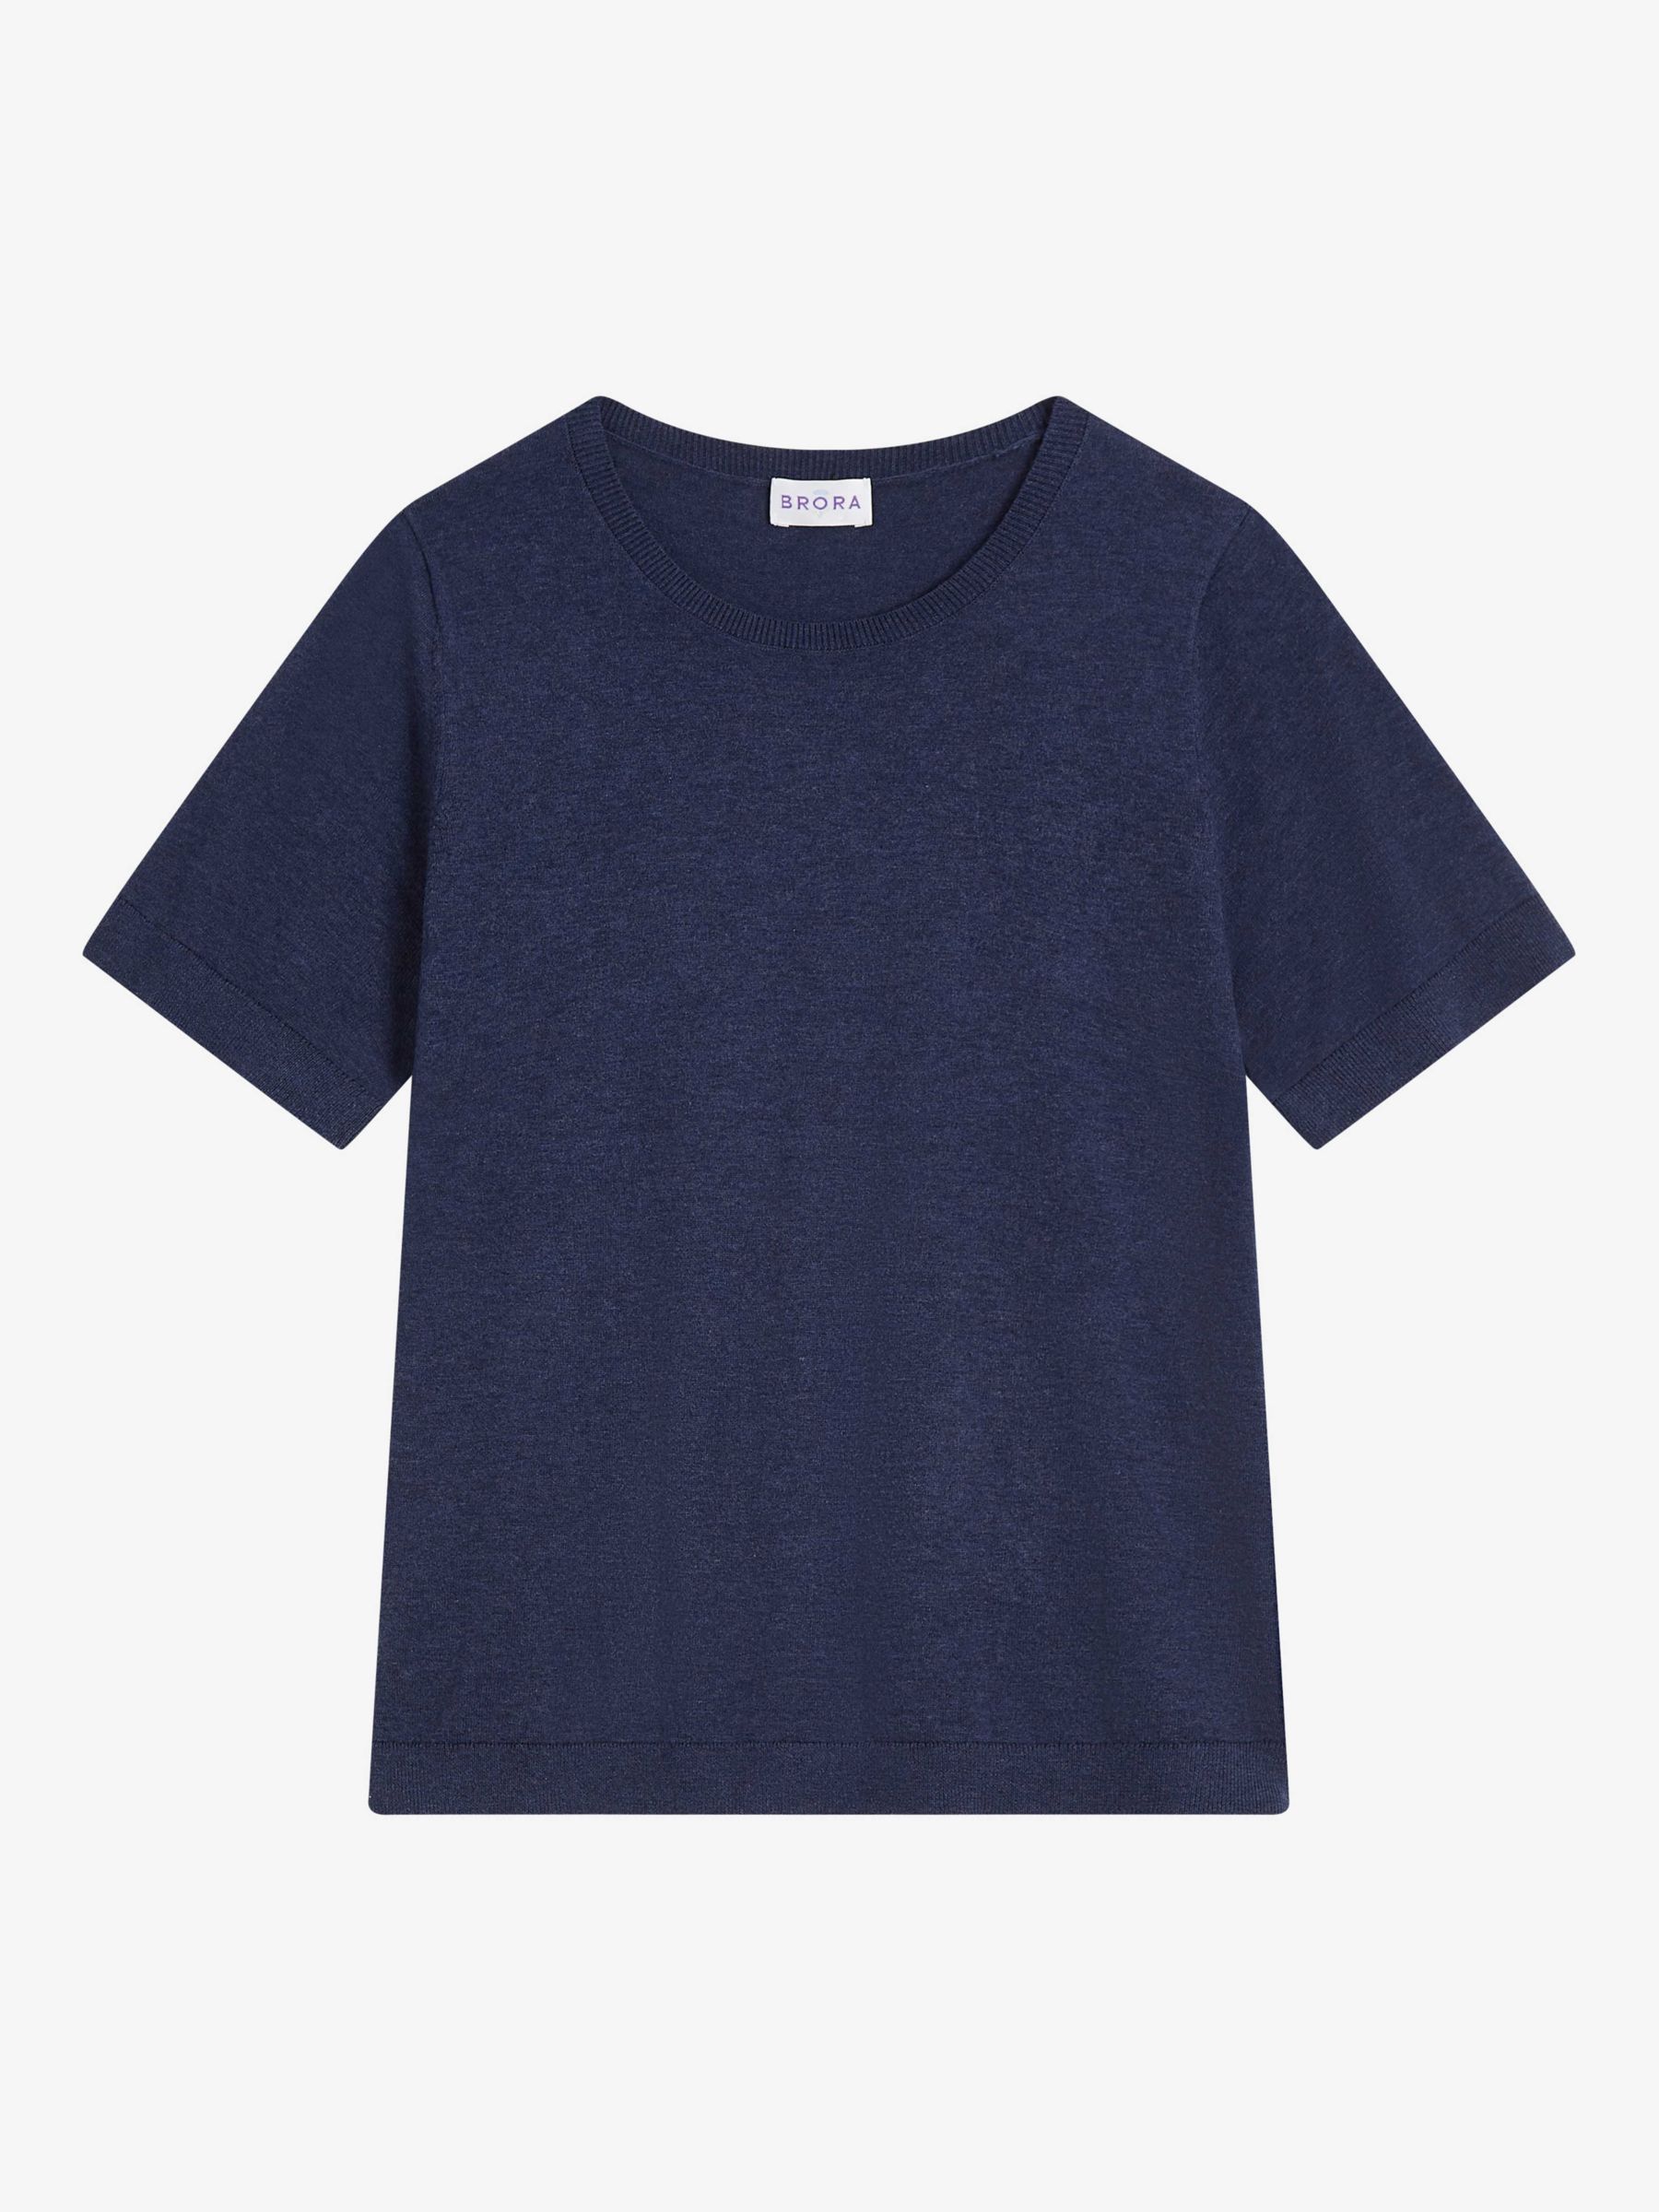 Brora Cotton Knit Classic Crew T-Shirt, Navy, 6